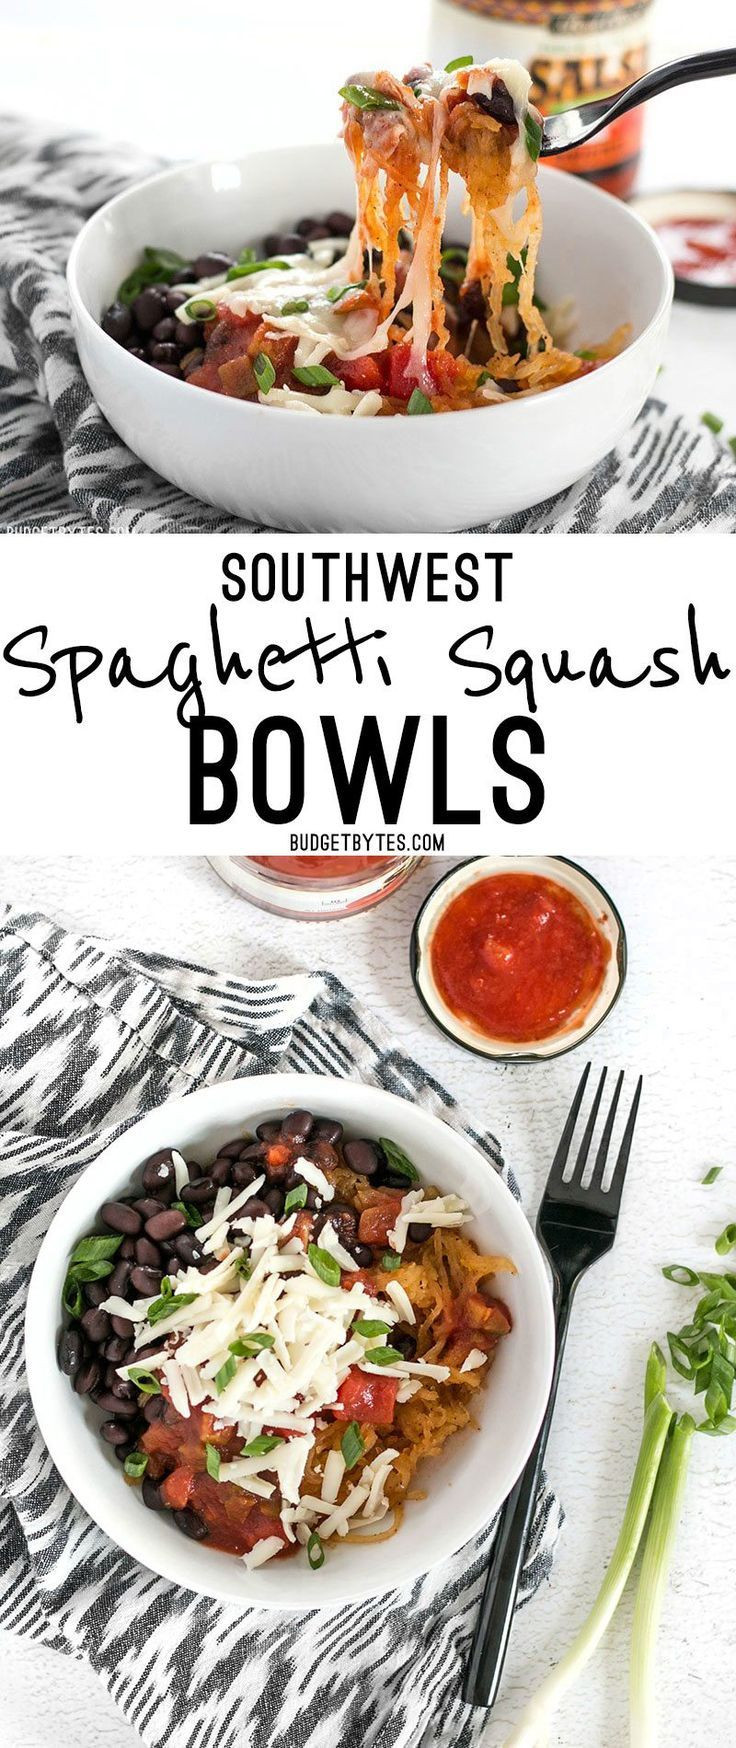 Spaghetti Squash Carbs And Fiber
 Southwest Spaghetti Squash Bowls Recipe